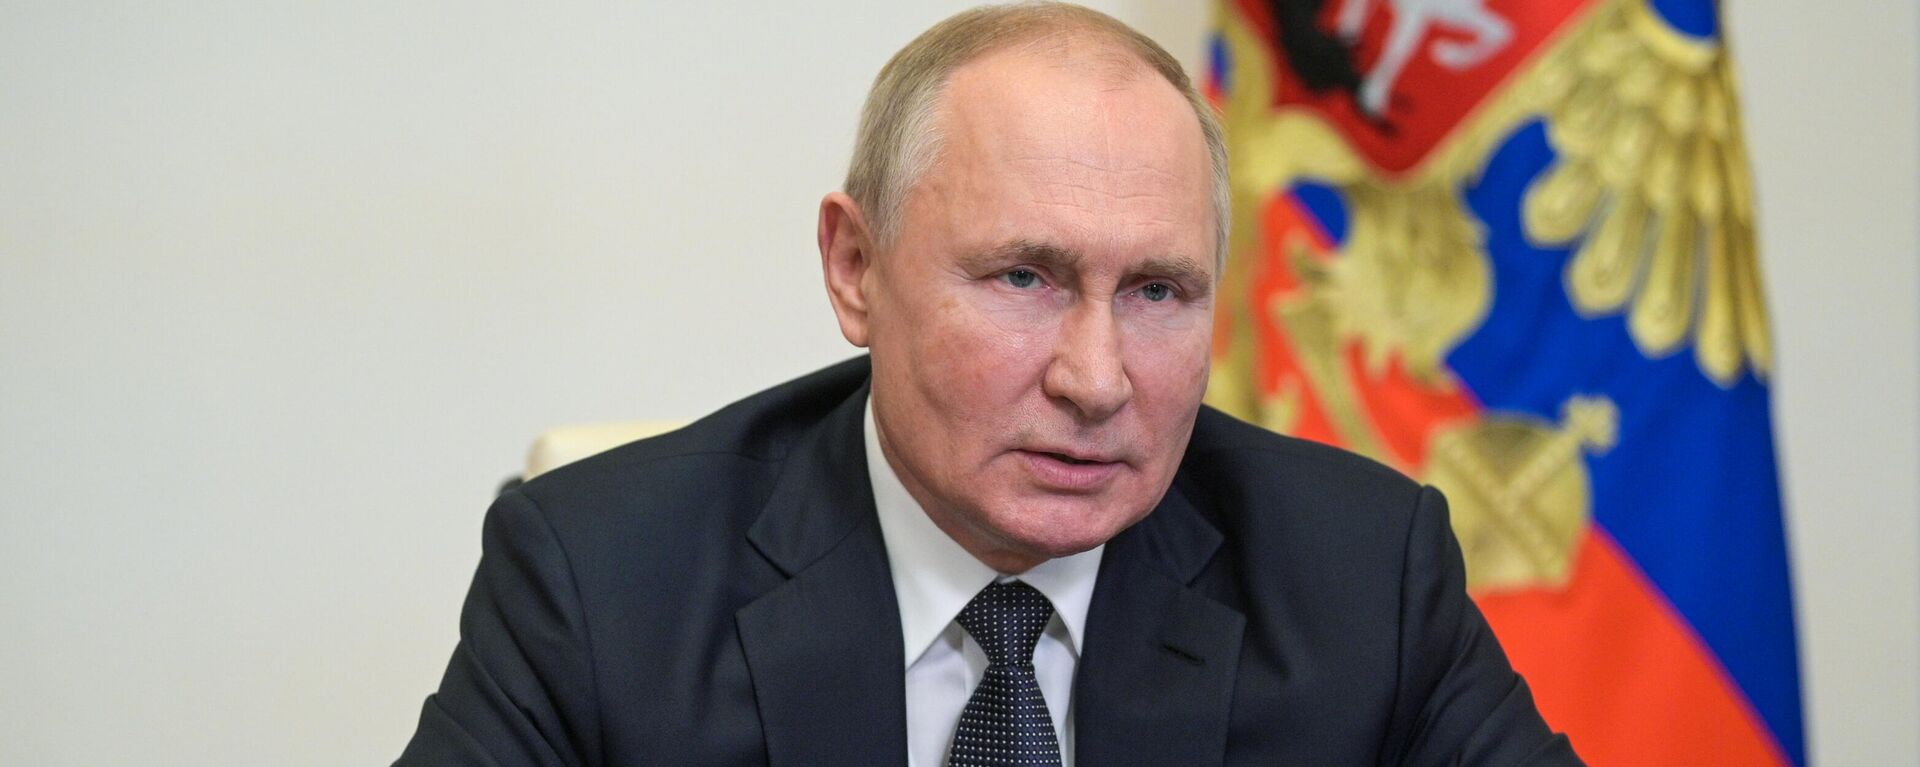 Vladímir Putin,  presidente de Rusia  - Sputnik Mundo, 1920, 12.10.2021